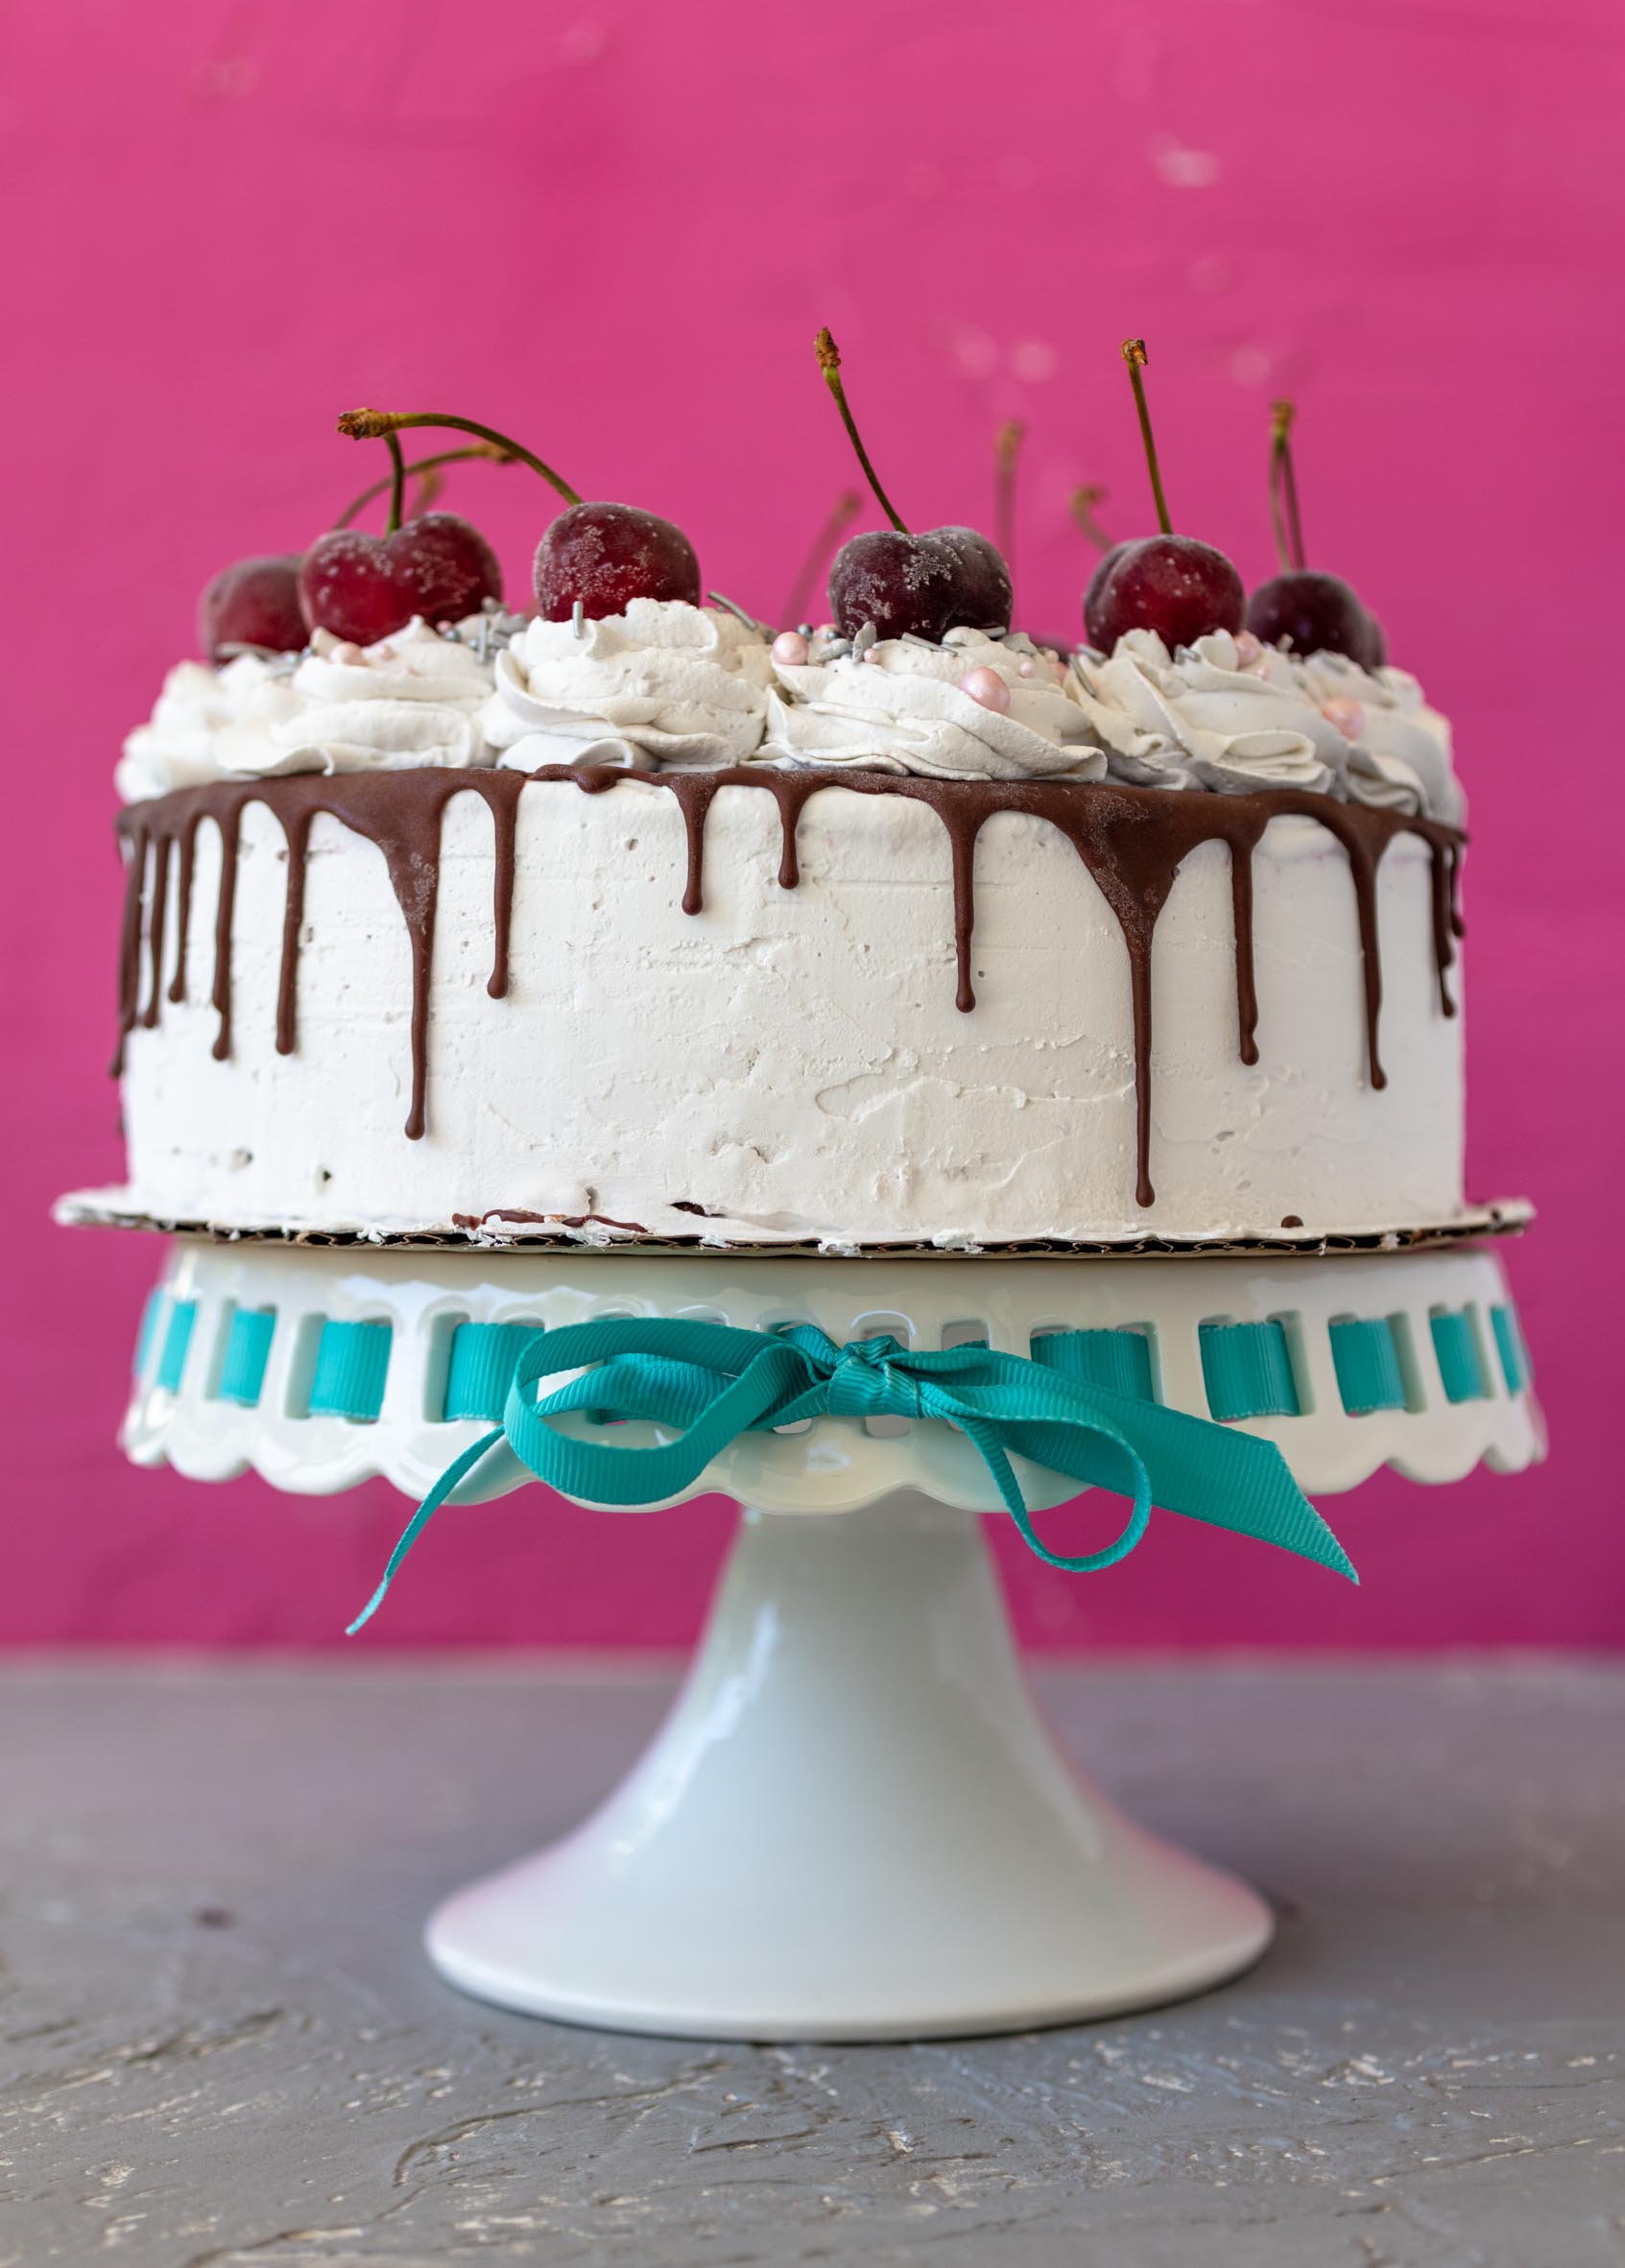 Vegan Ice Cream Cake with whipped cream and cherries on top